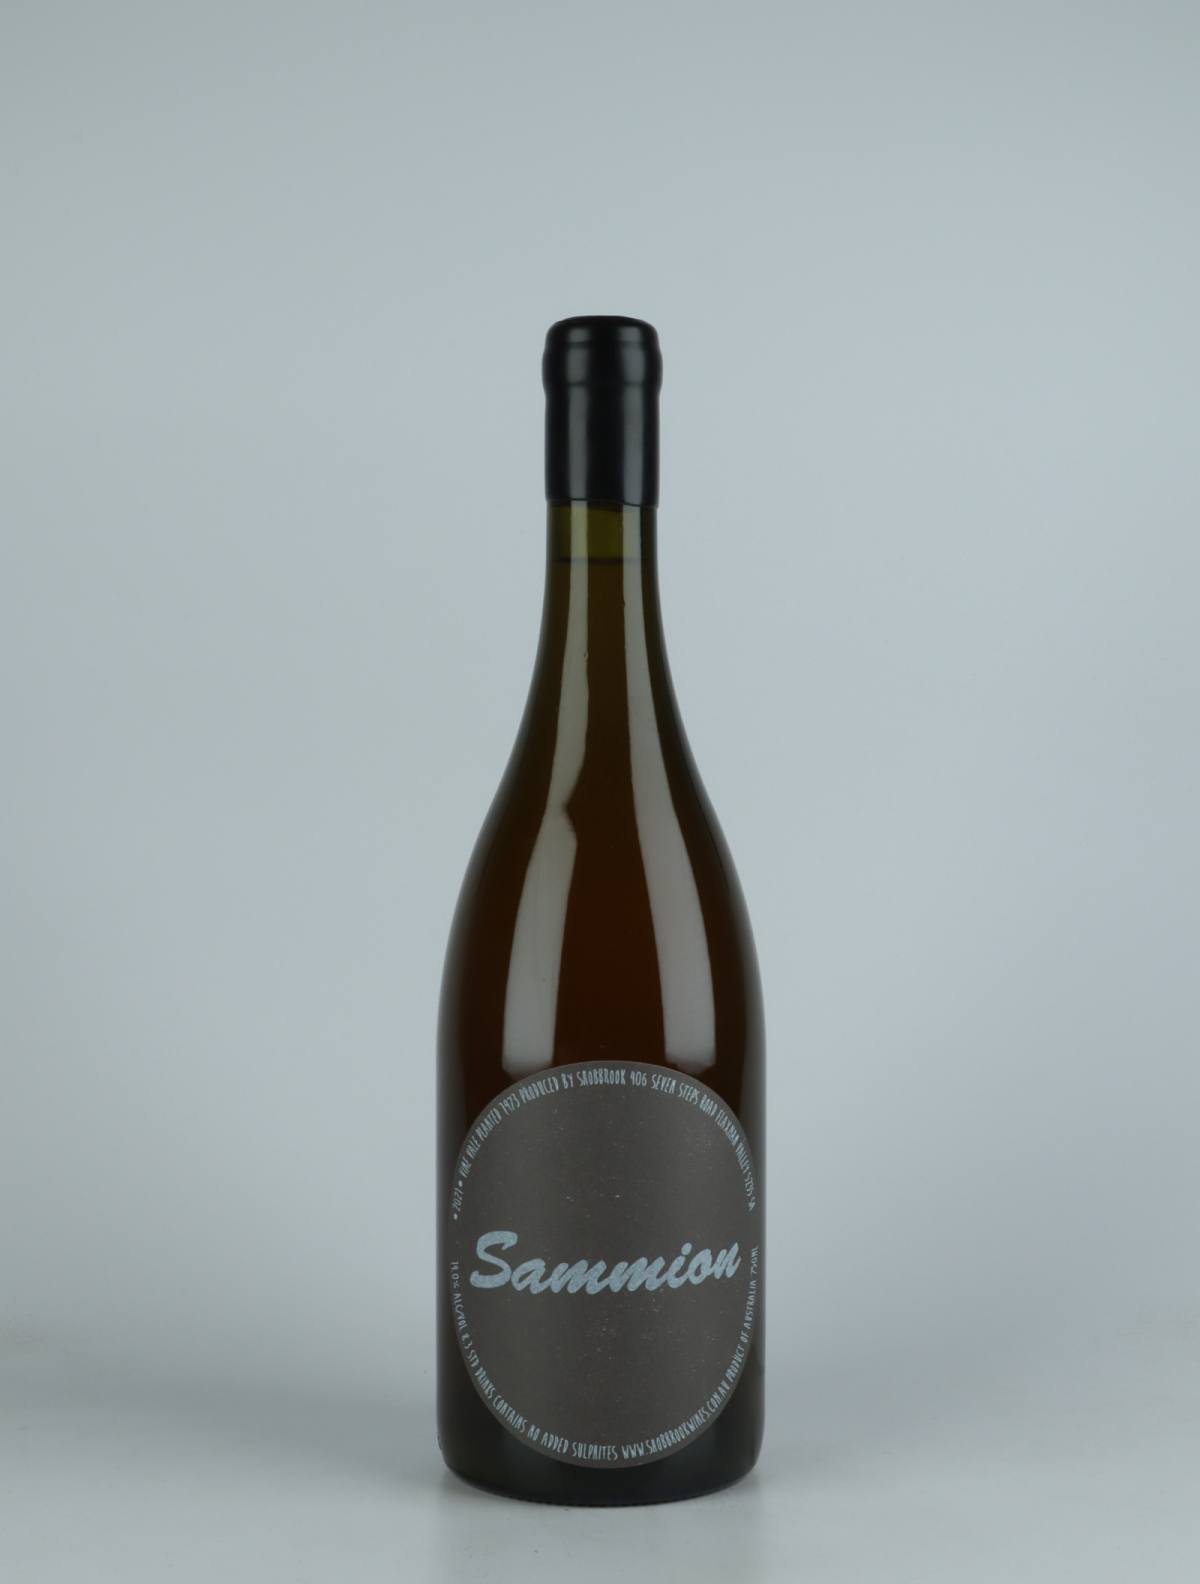 A bottle 2021 Sammion White wine from Tom Shobbrook, Barossa Valley in Australia